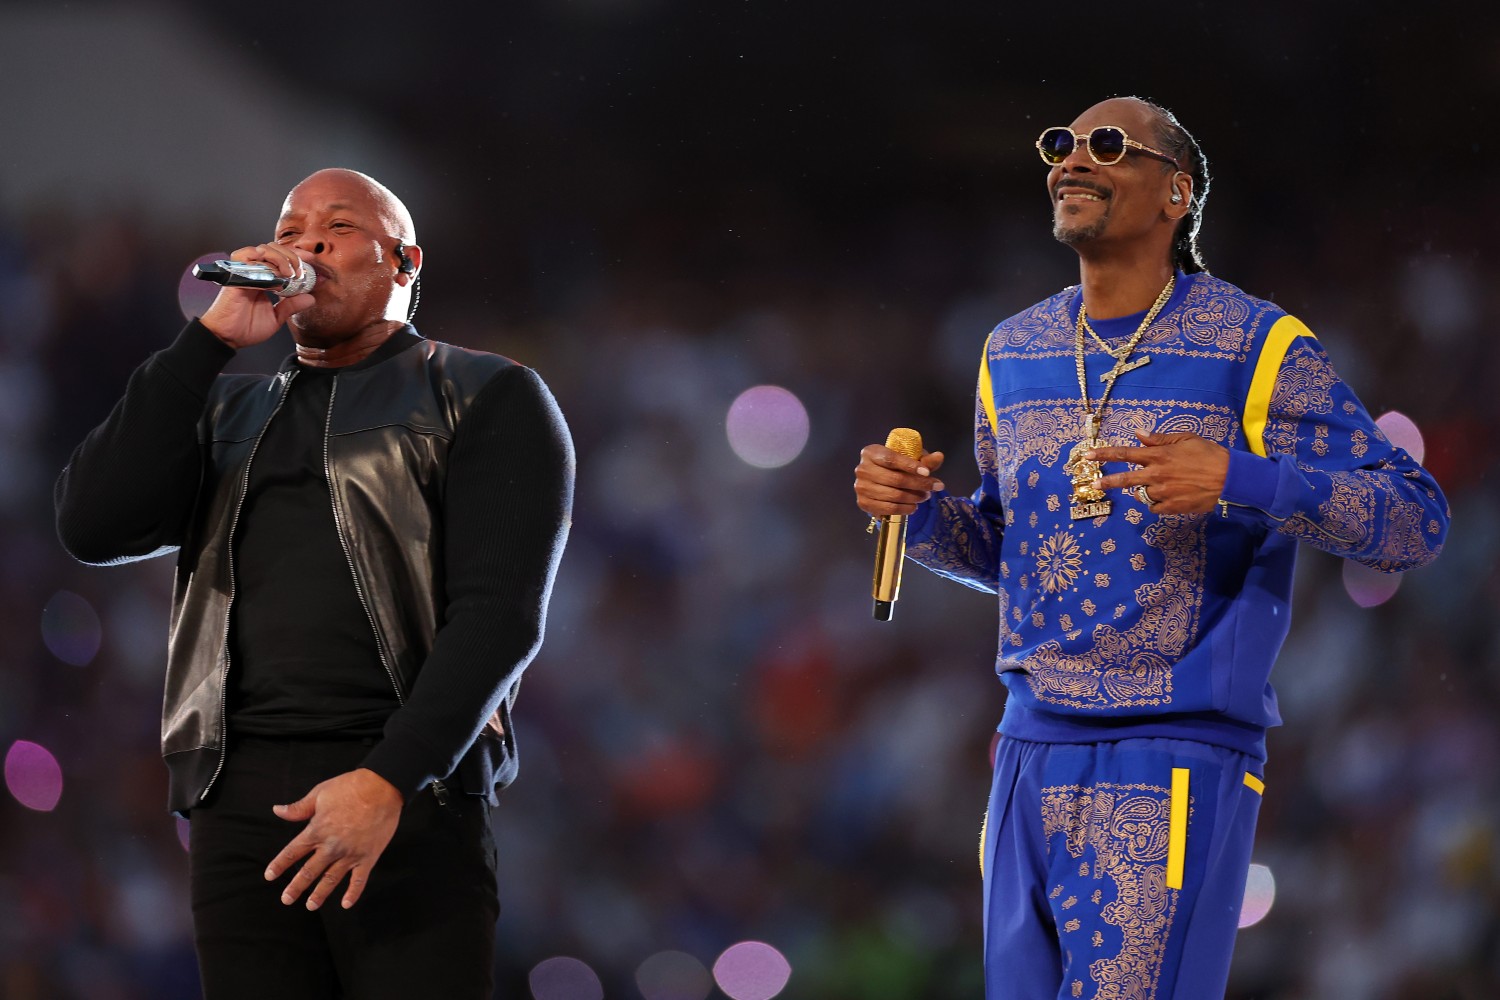 Dr. Dre - Snopp Dogg - Super Bowl 2022